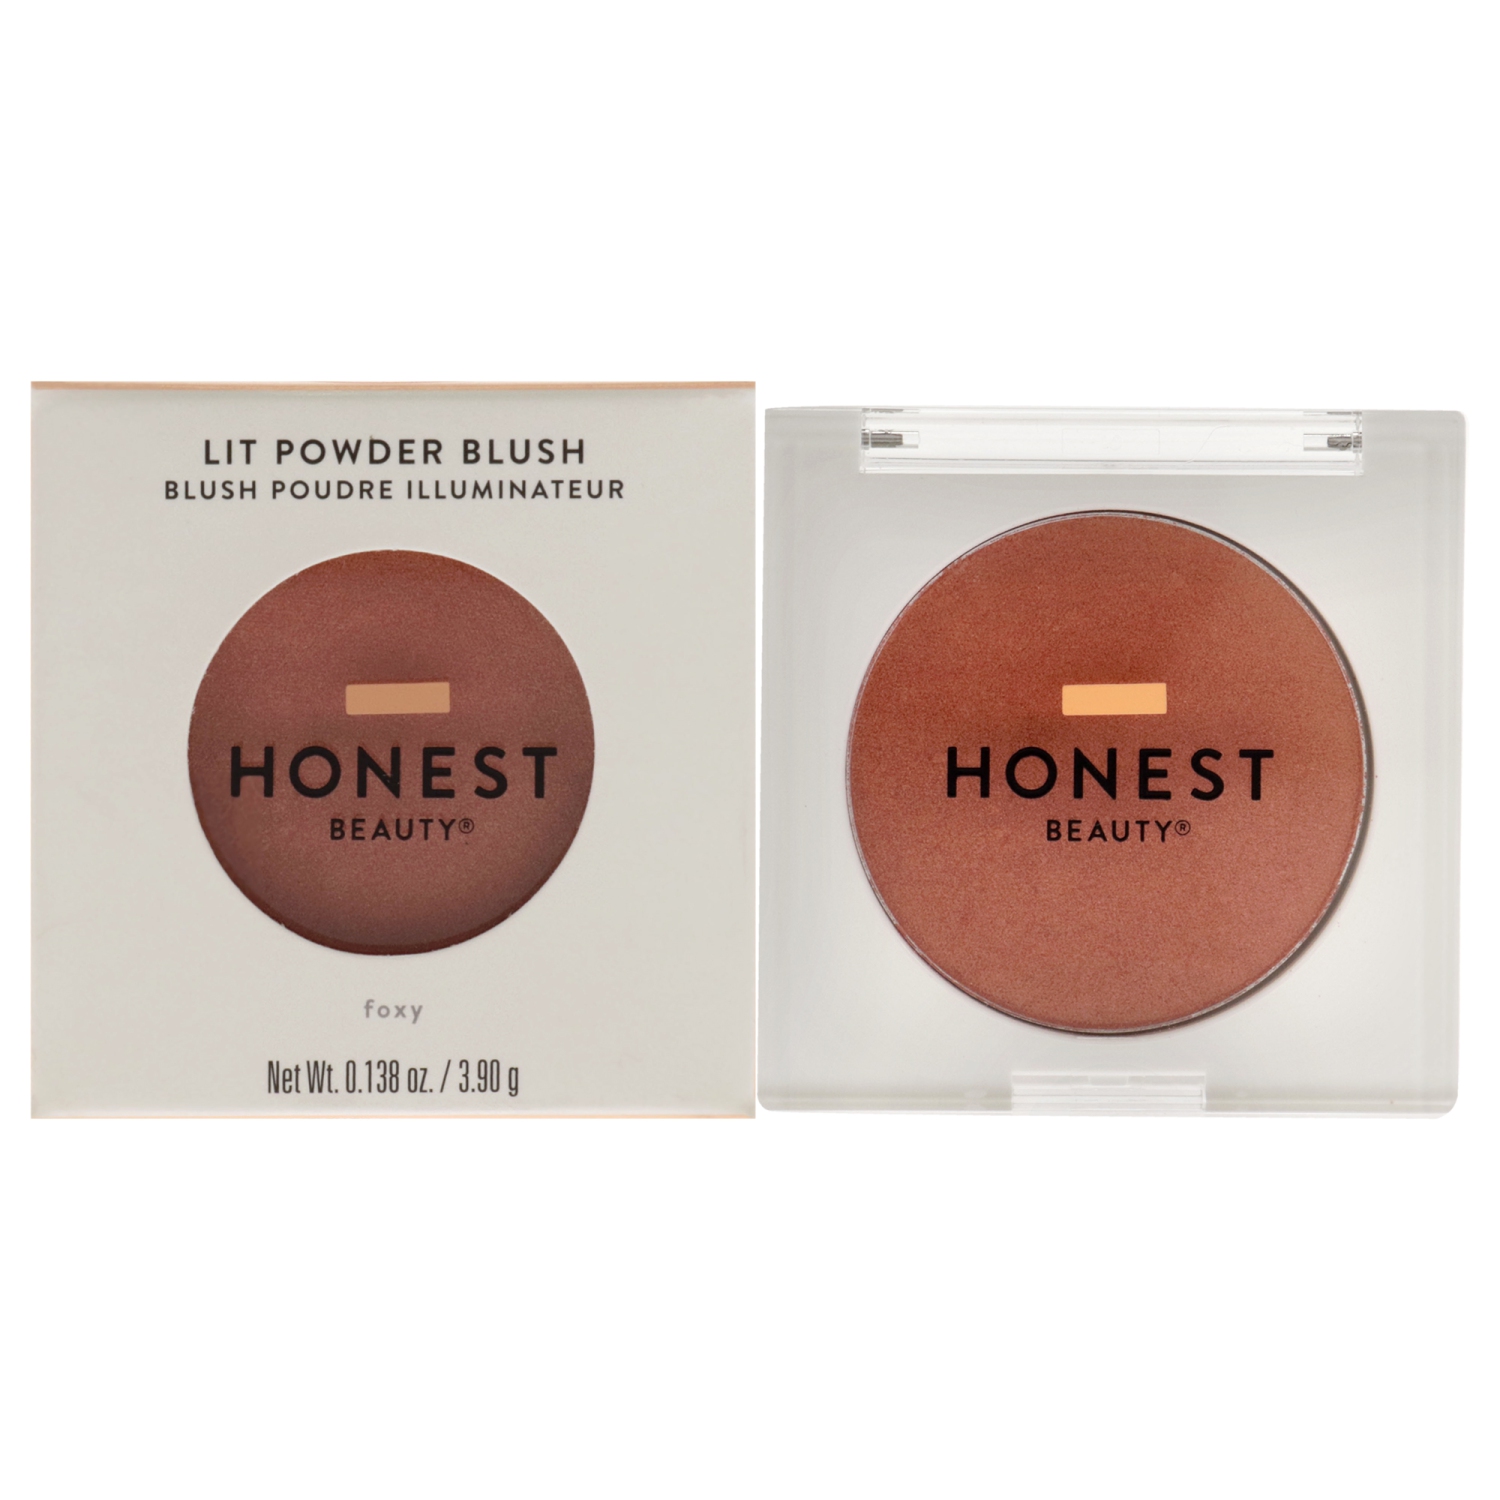 Lit Powder Blush - Foxy by Honest for Women - 0.138 oz Blush